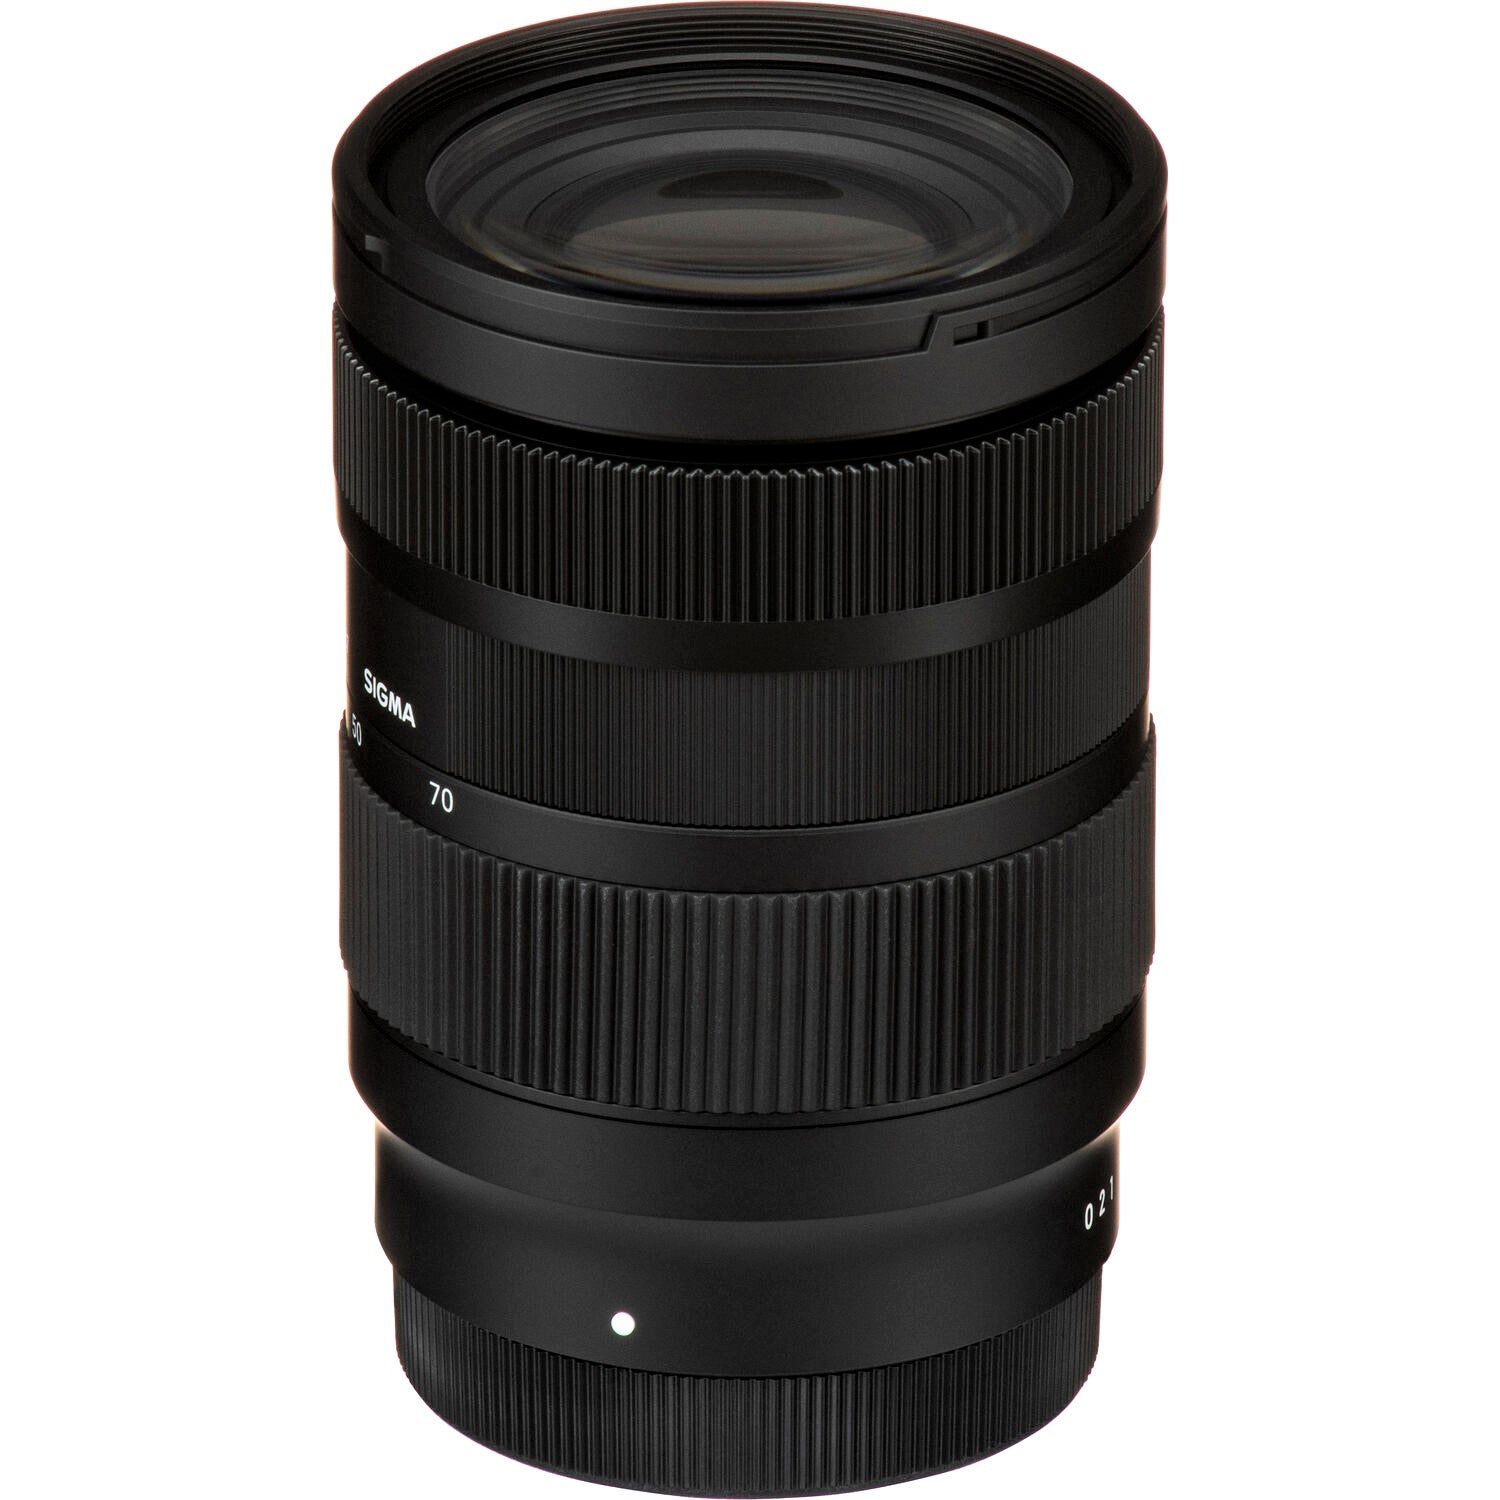 Sigma 28-70mm F2.8 DG DN Contemporary Lens (Leica L Mount)